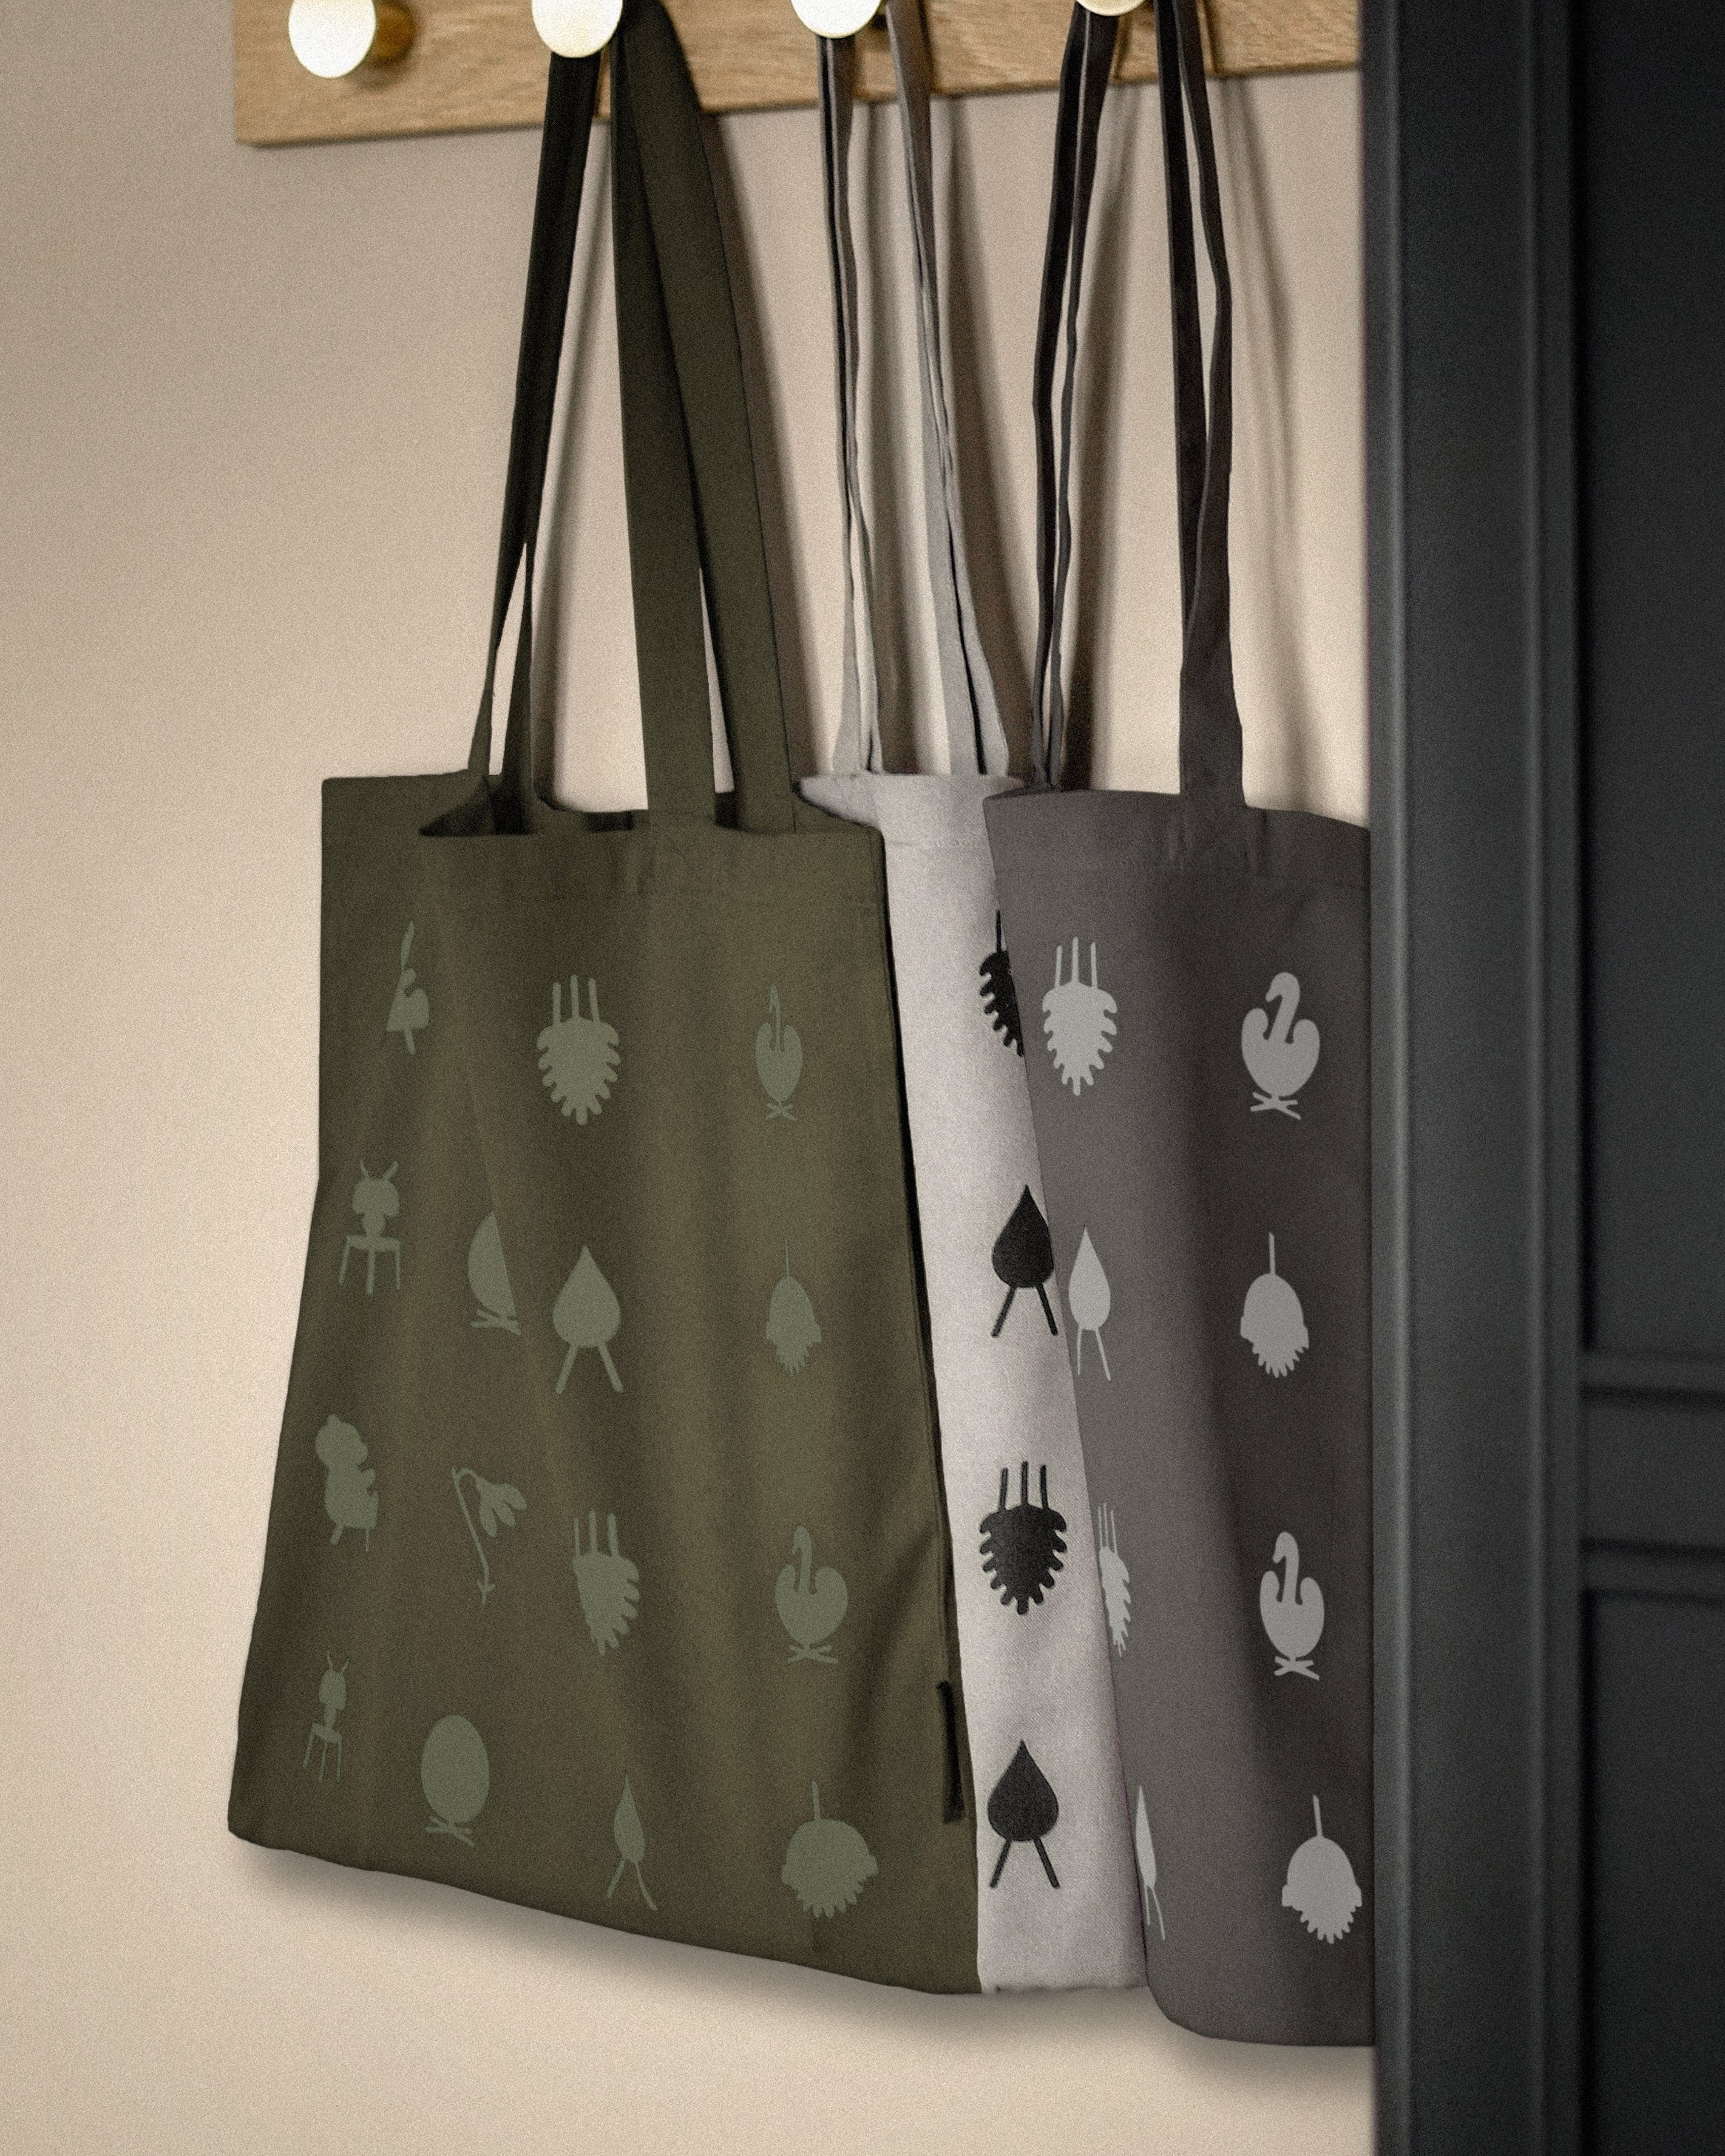 Brainchild Design Icons Carrying Bag, Dark Grey